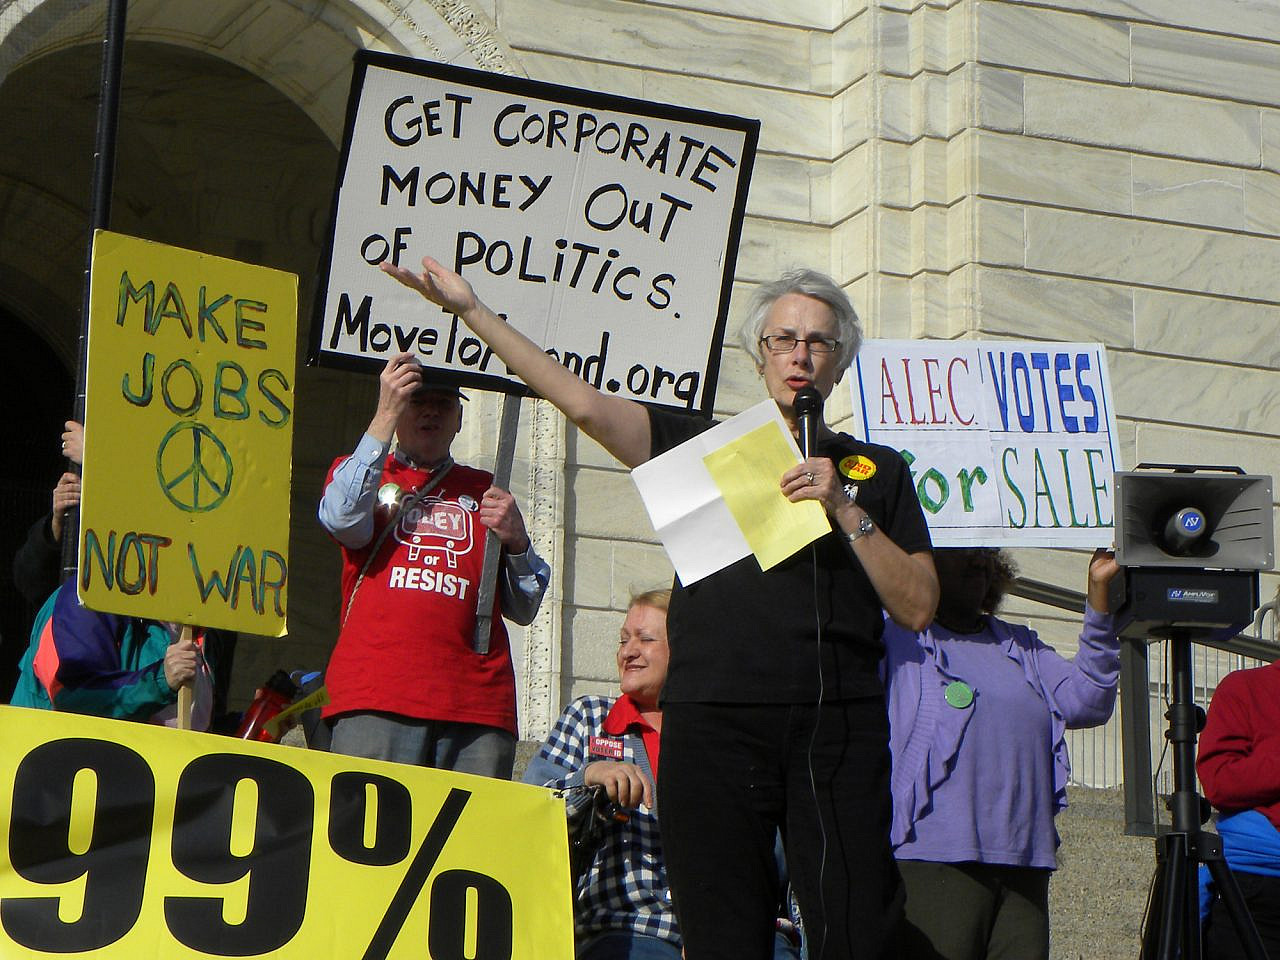 A demonstrator speaks at a protest against the American Legislative Exchange Council, St. Paul, Minnesota, March 13, 2012. (Fibonacci Blue/CC BY 2.0)